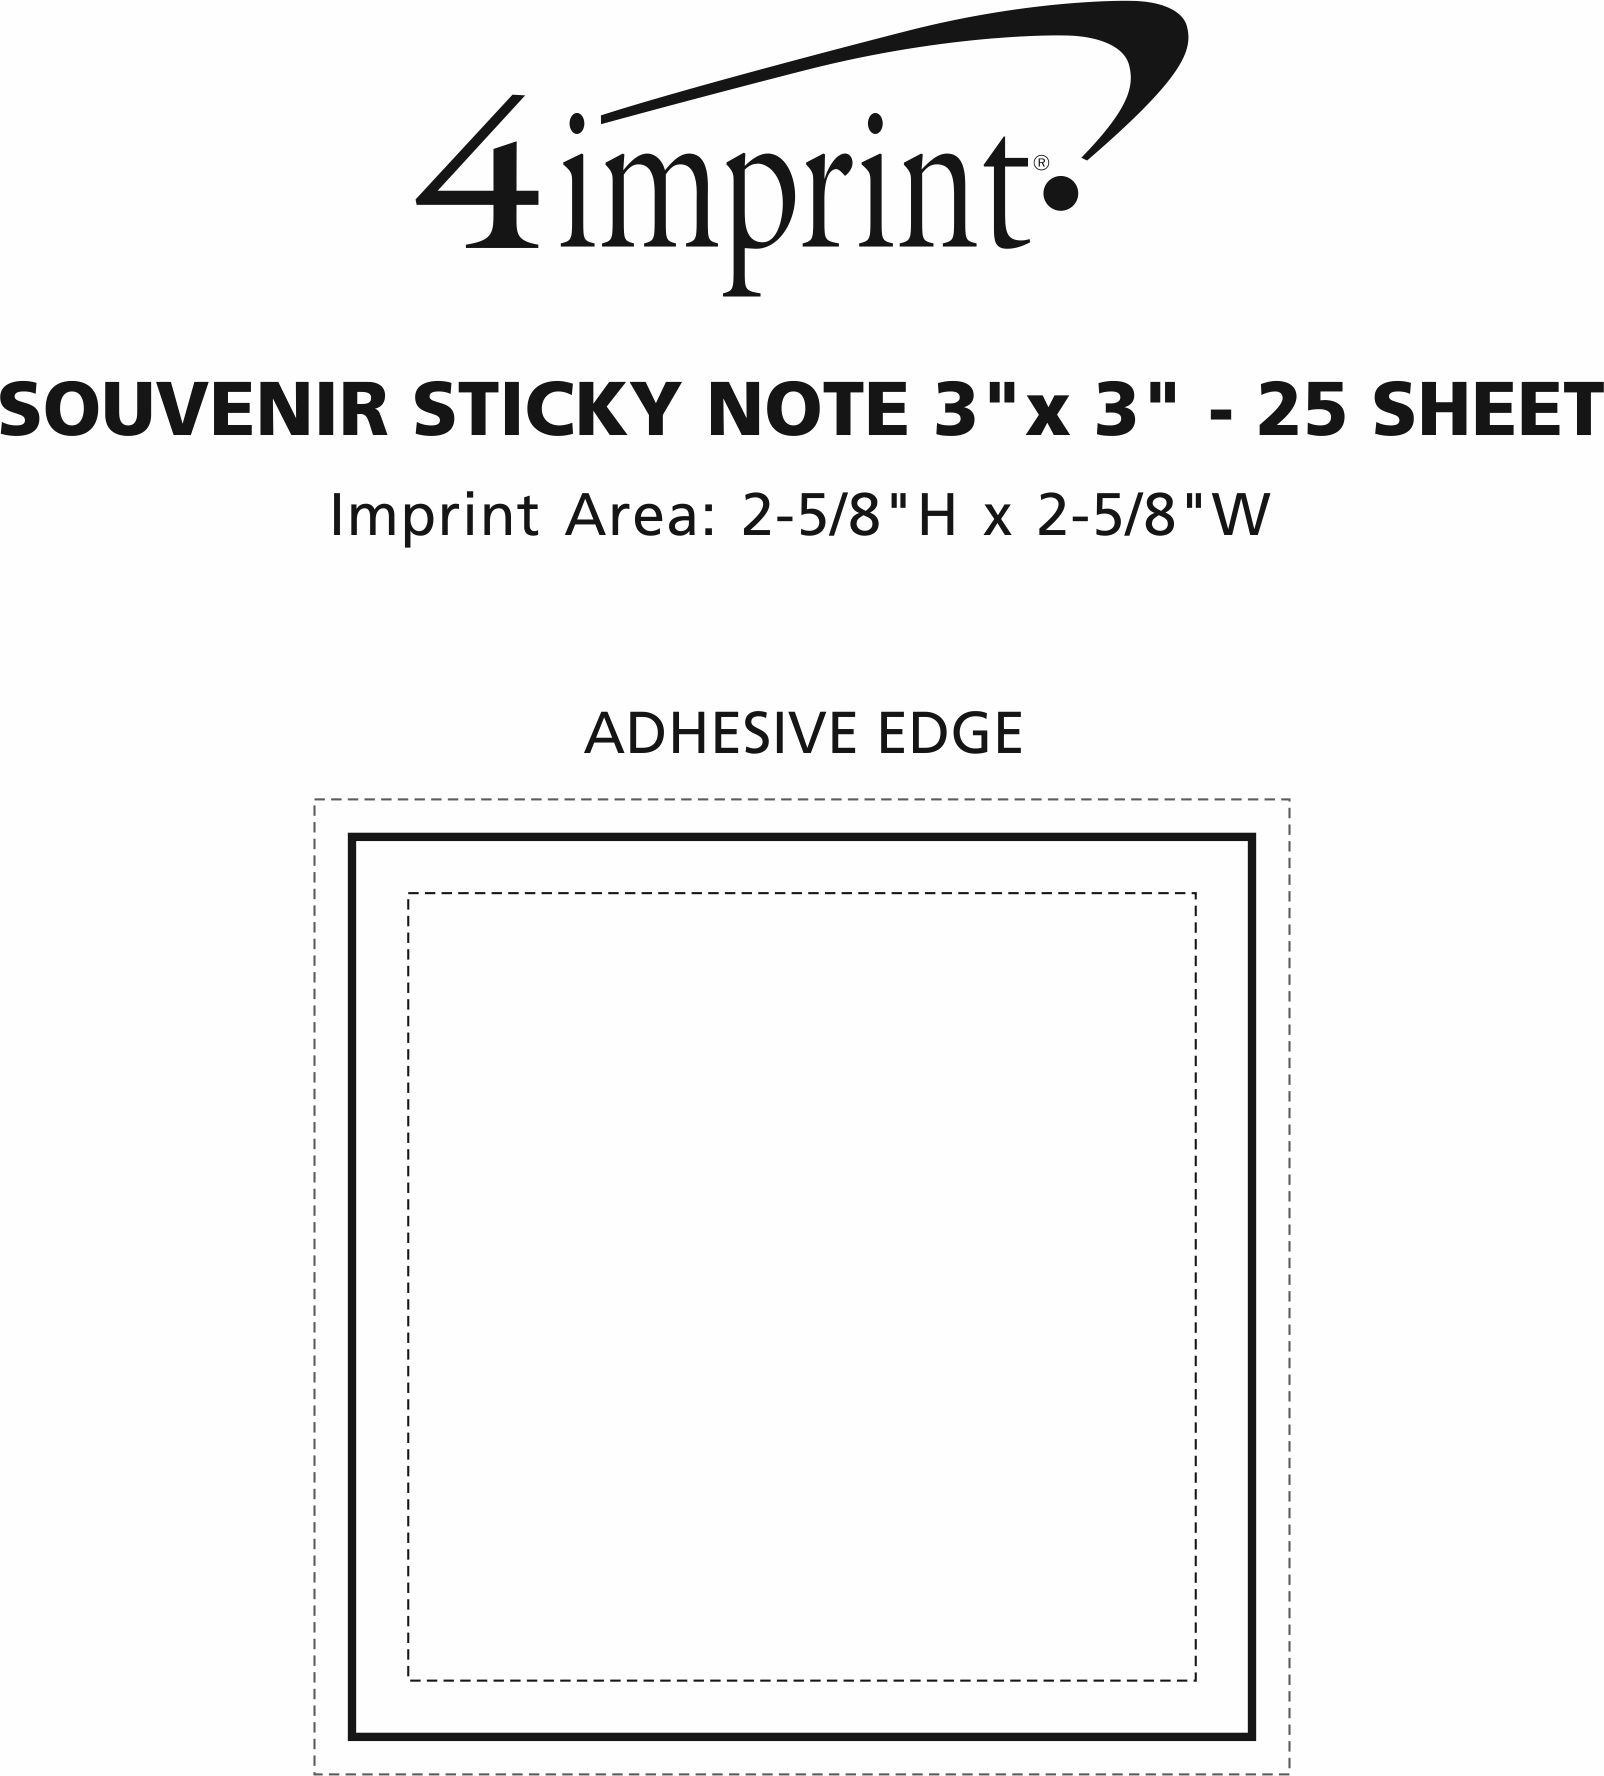 Imprint Area of Souvenir Sticky Note - 3" x 3" - 25 Sheet